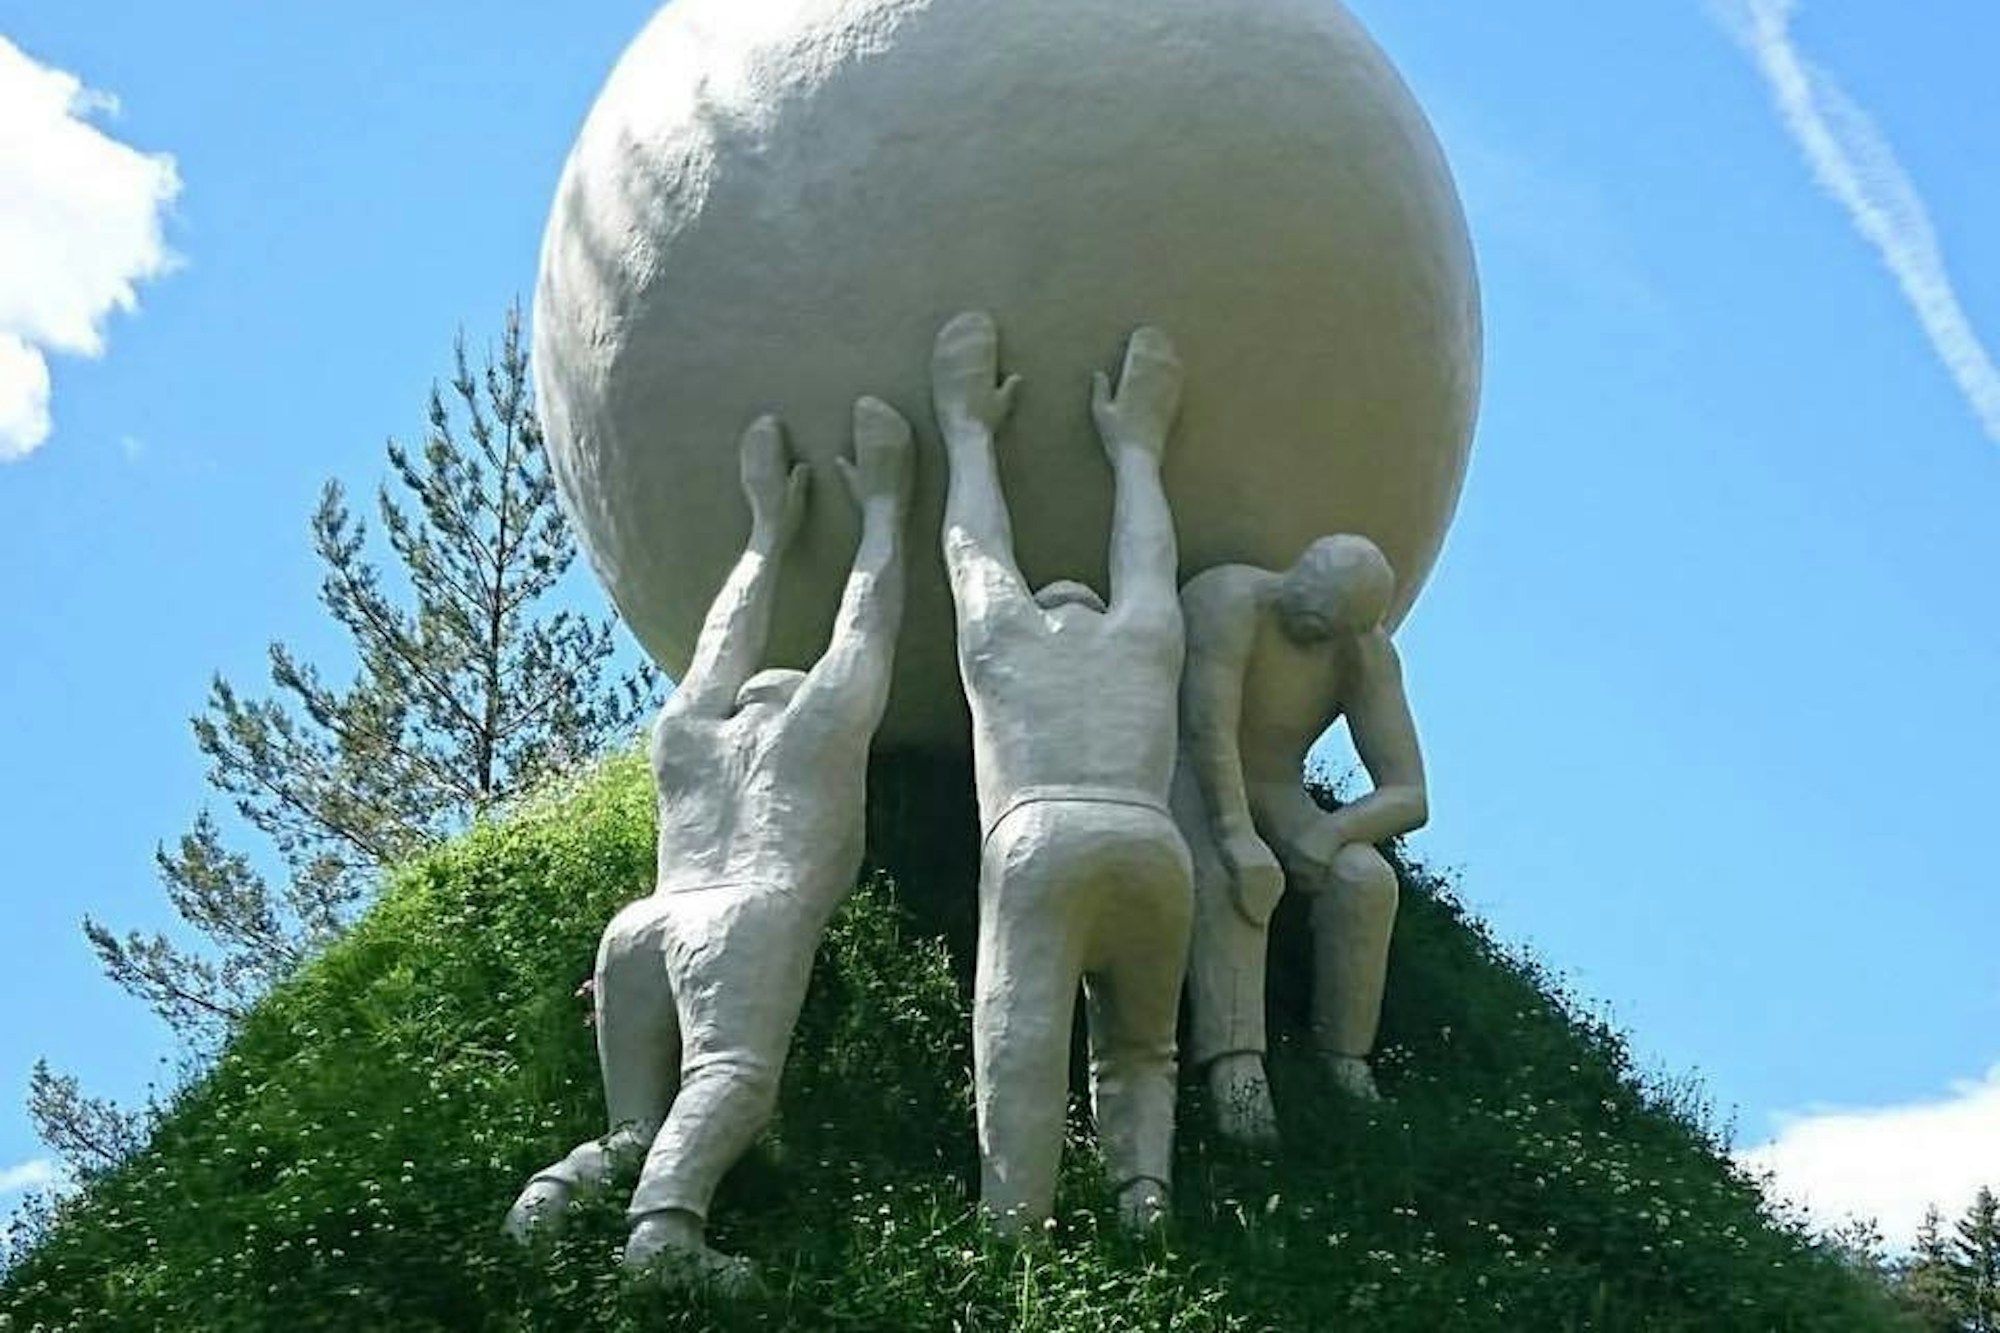 Sculpture, three men pushing a giant ball up a hill.